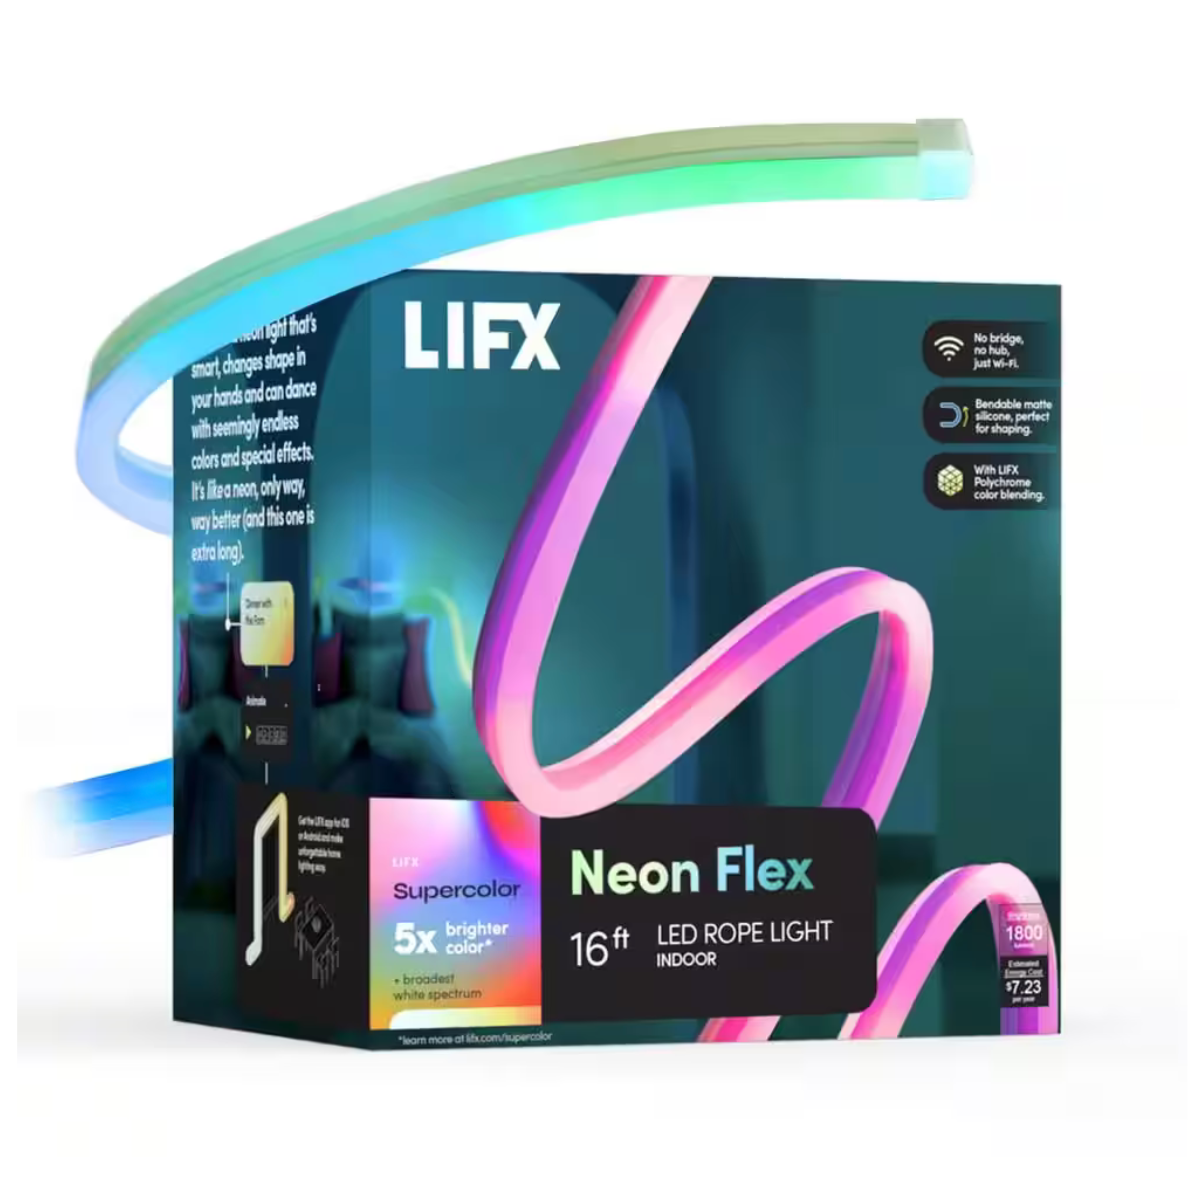 The LIFX Neon Flex LED Rope Light